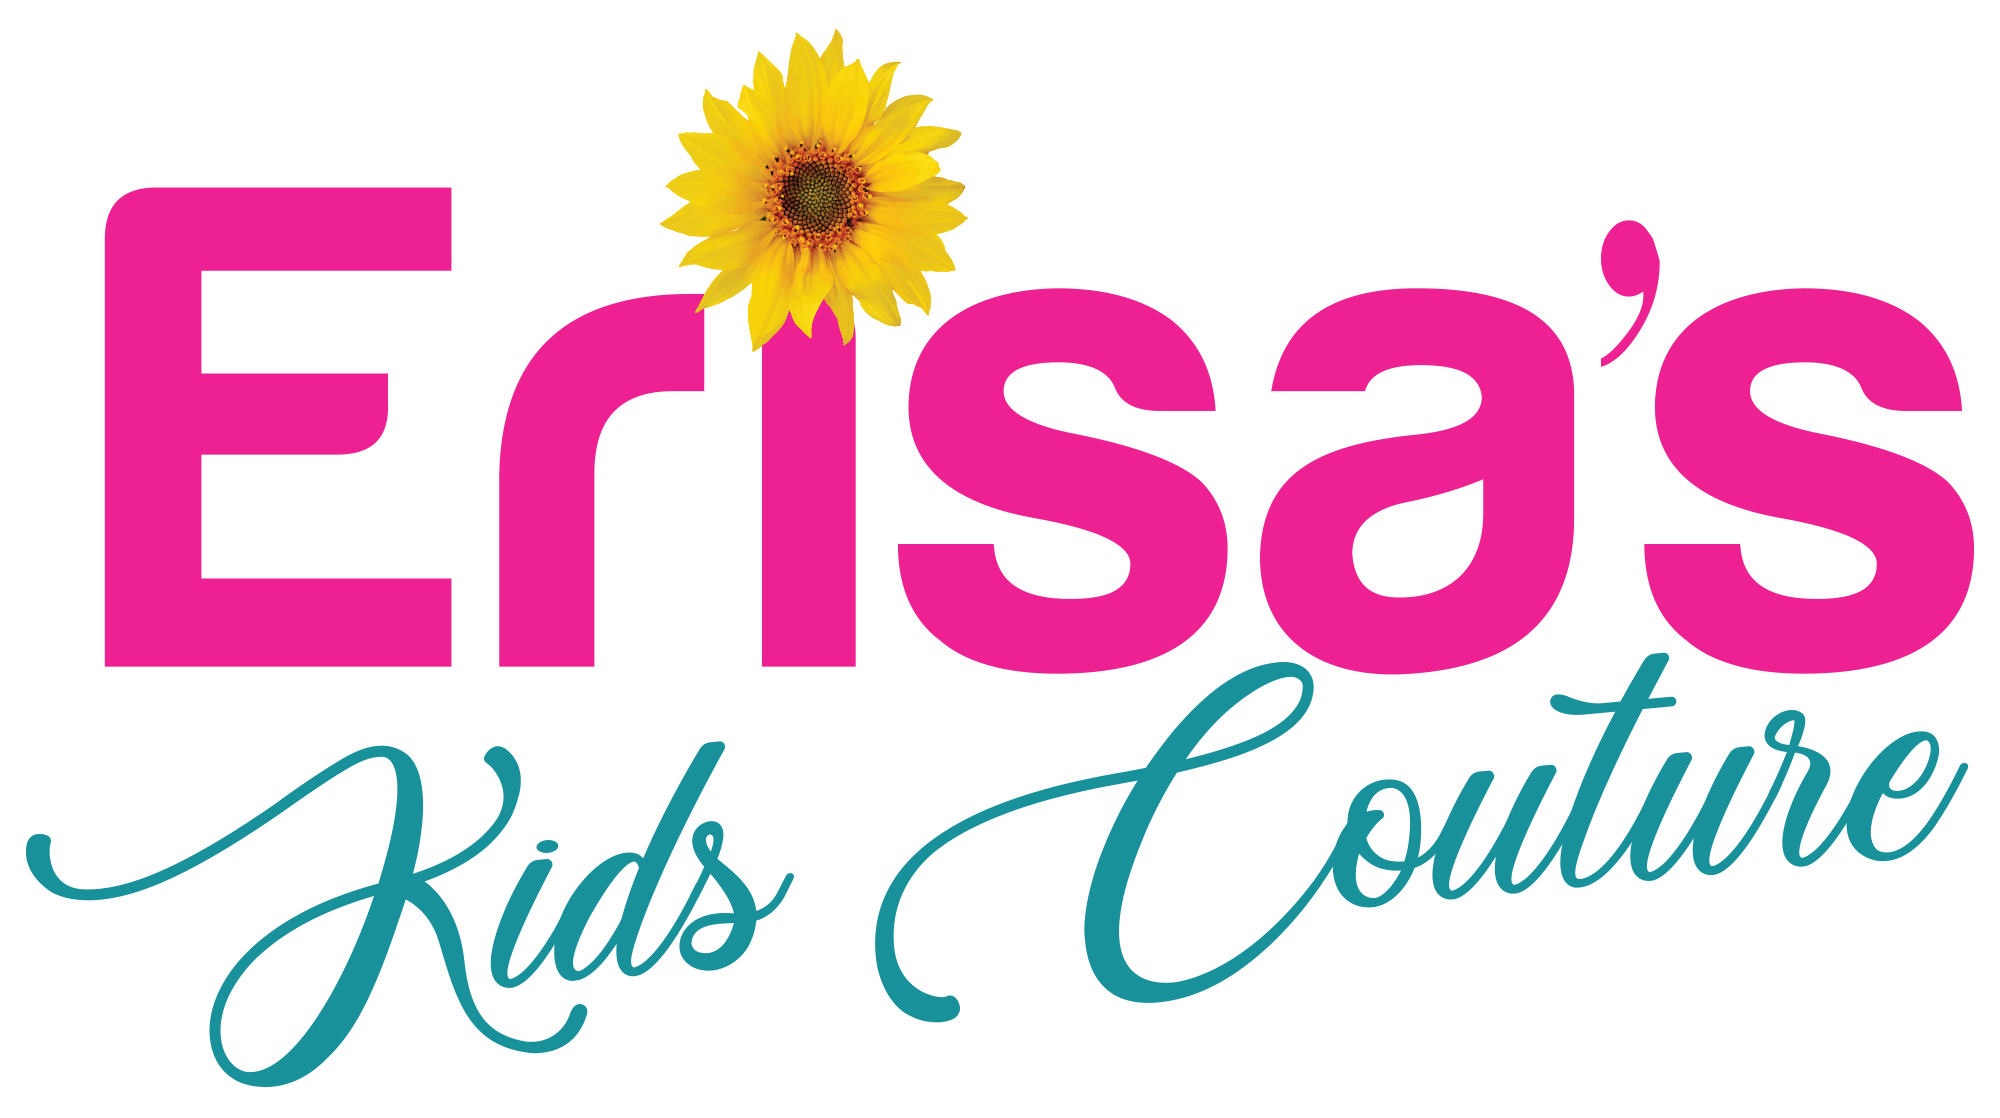 Erisa's Kids Couture